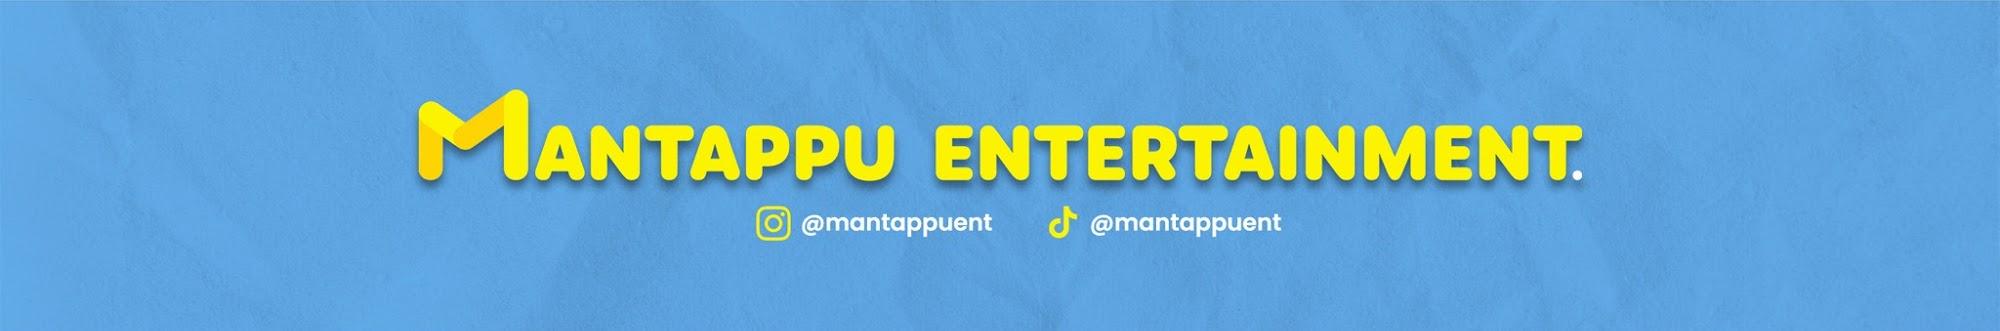 Mantappu Entertainment